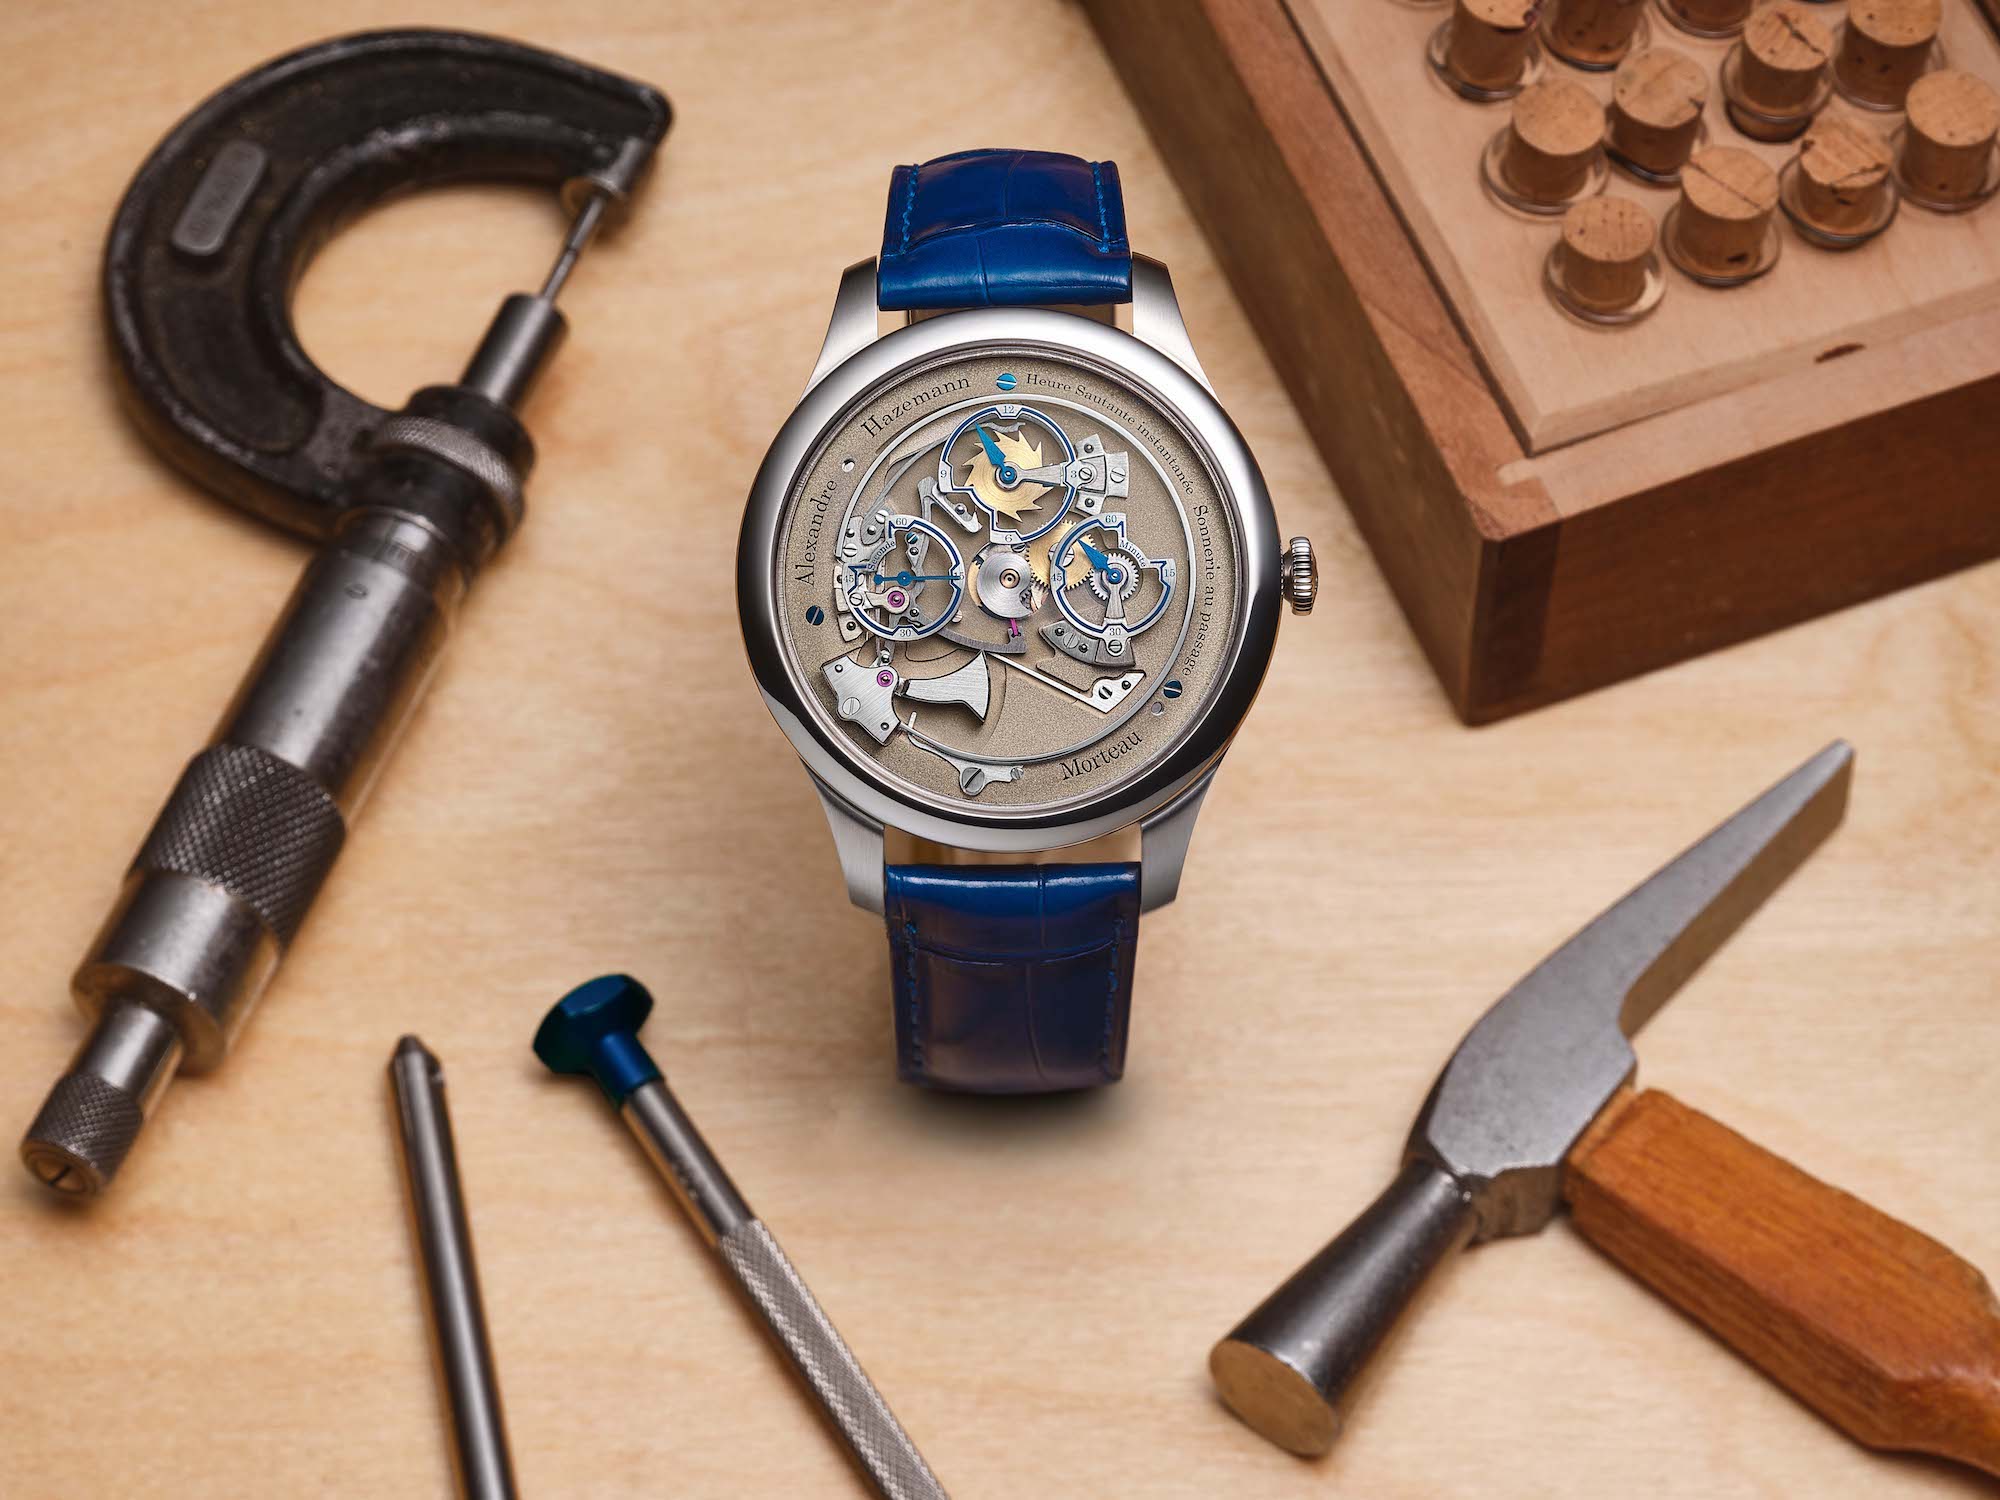 Alexandre Hazemann, a great watchmaker in the making